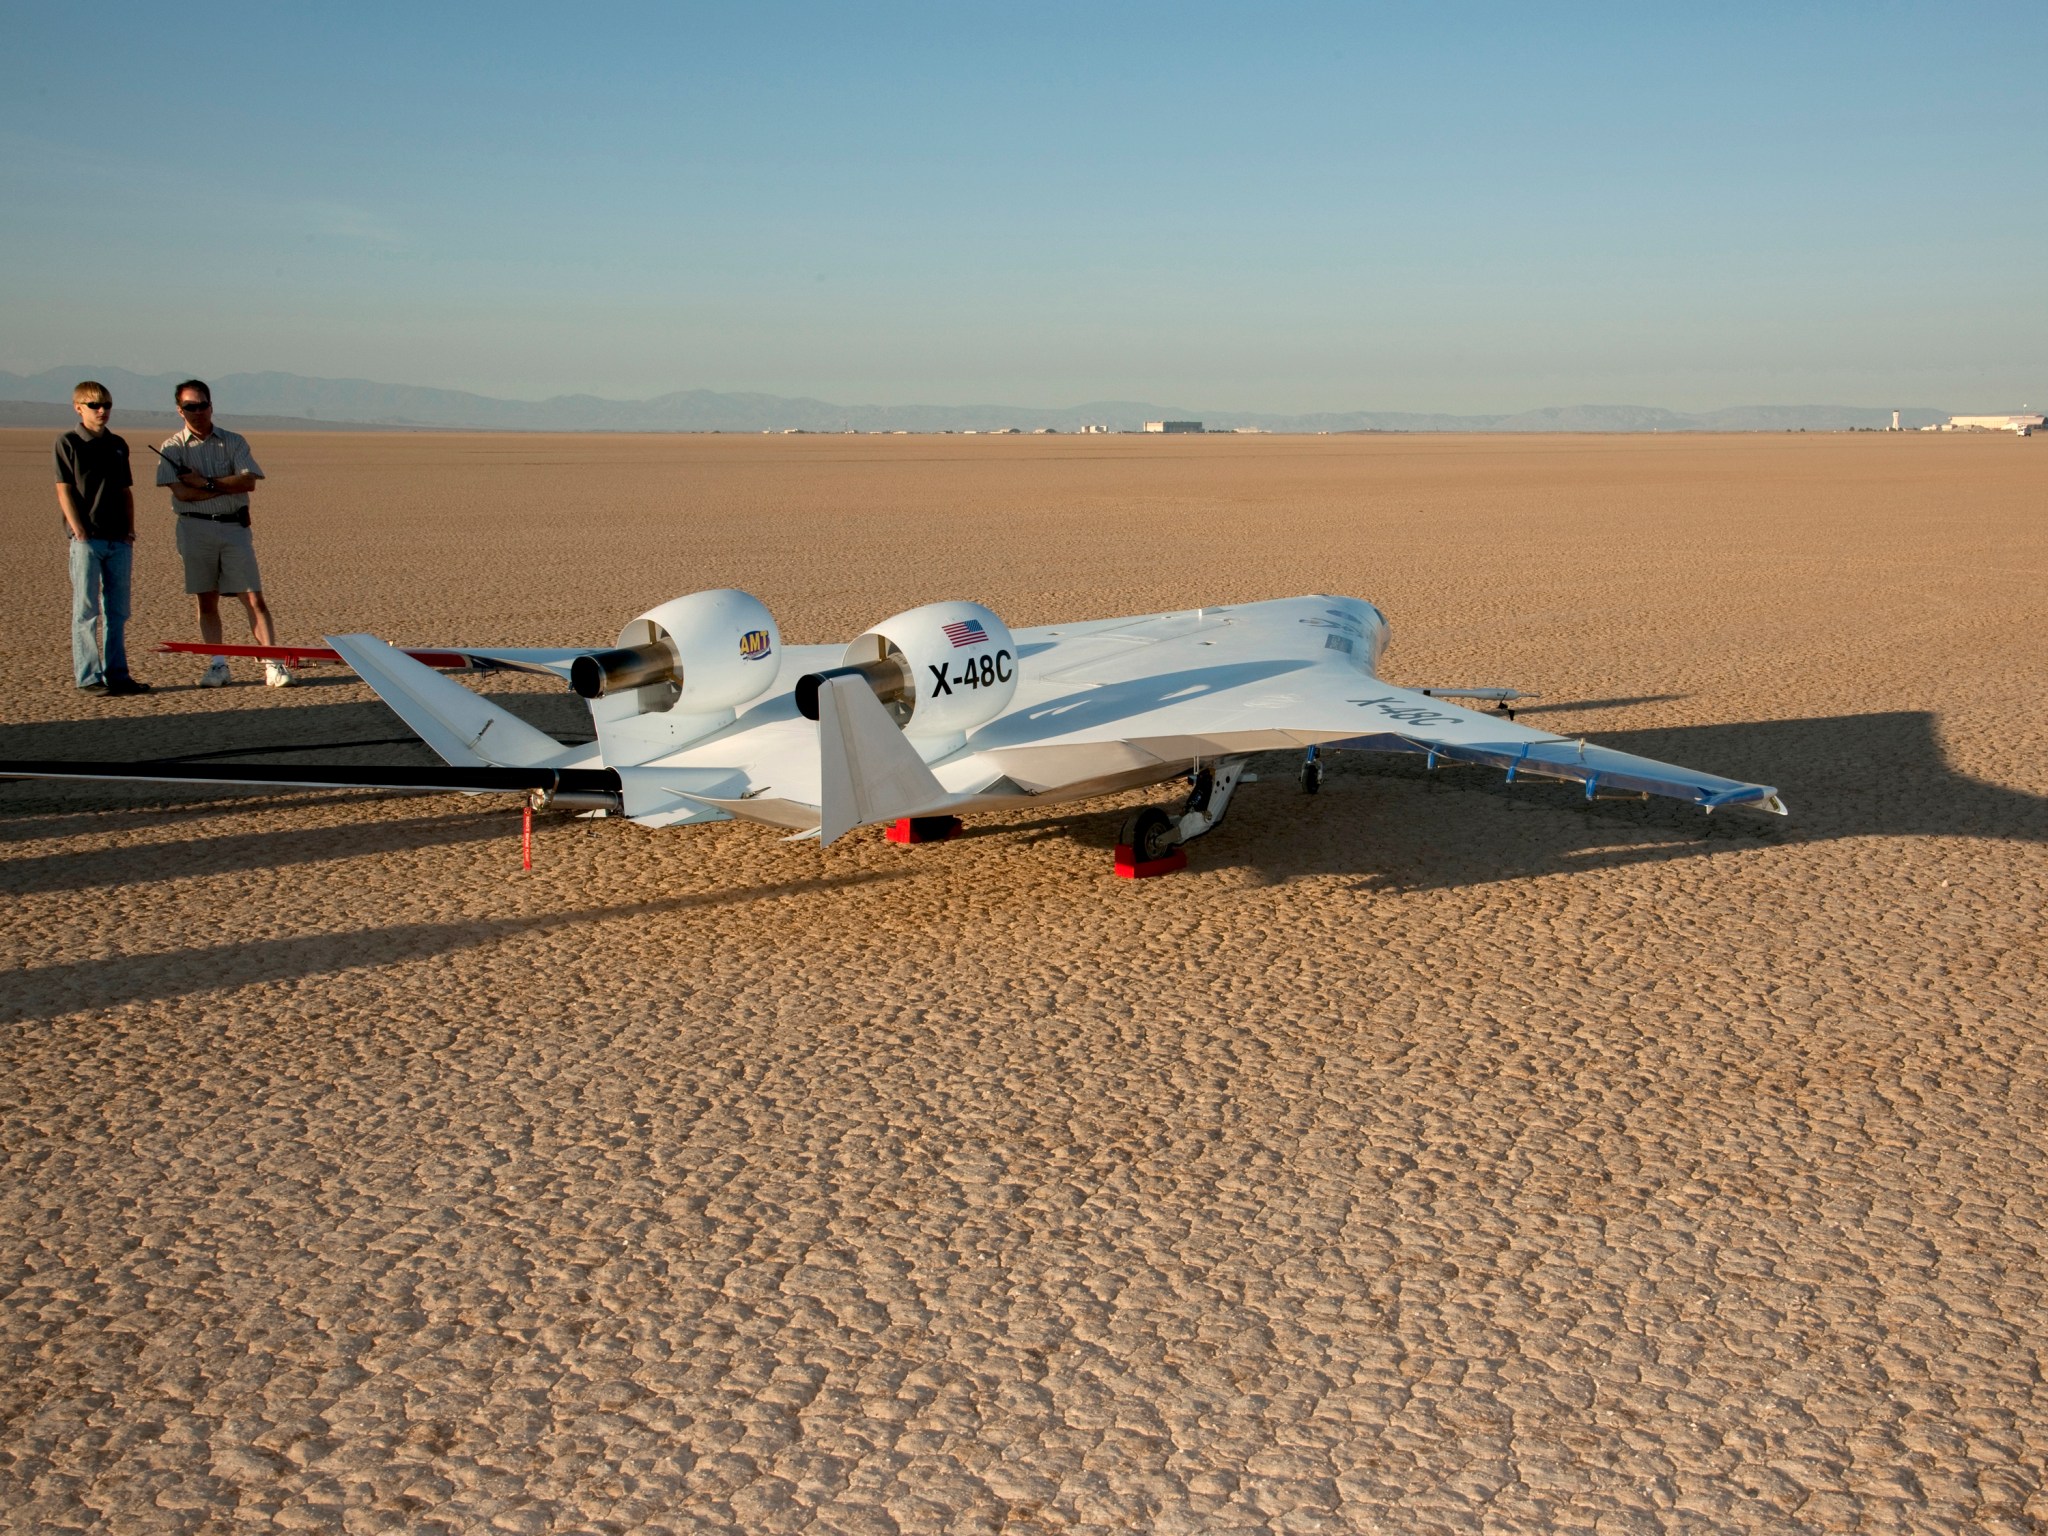 X-48C Blended Wing Body parked in the desert.